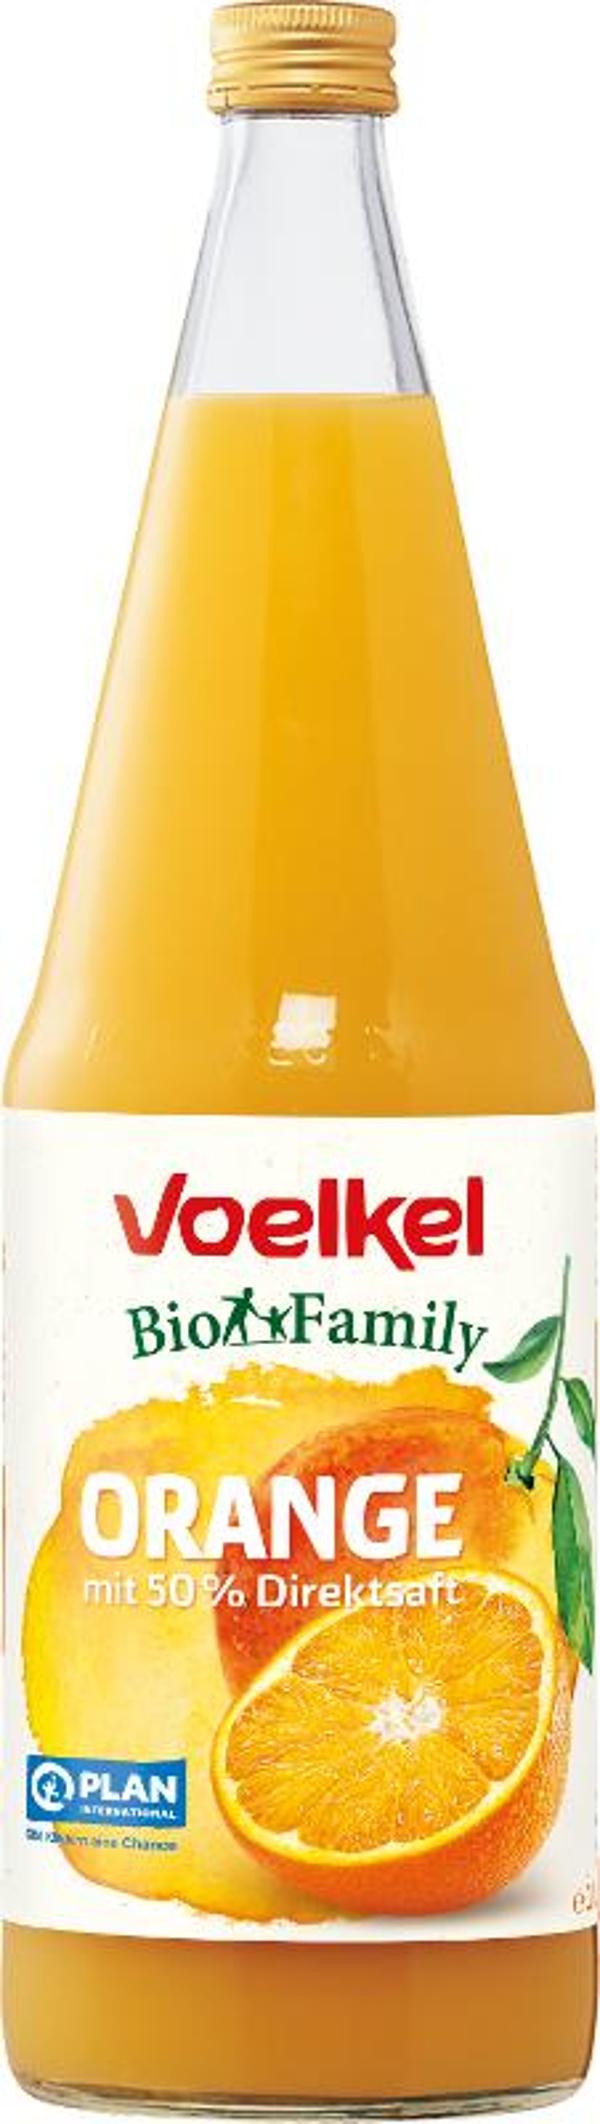 Produktfoto zu Voelkel family Orange 1L